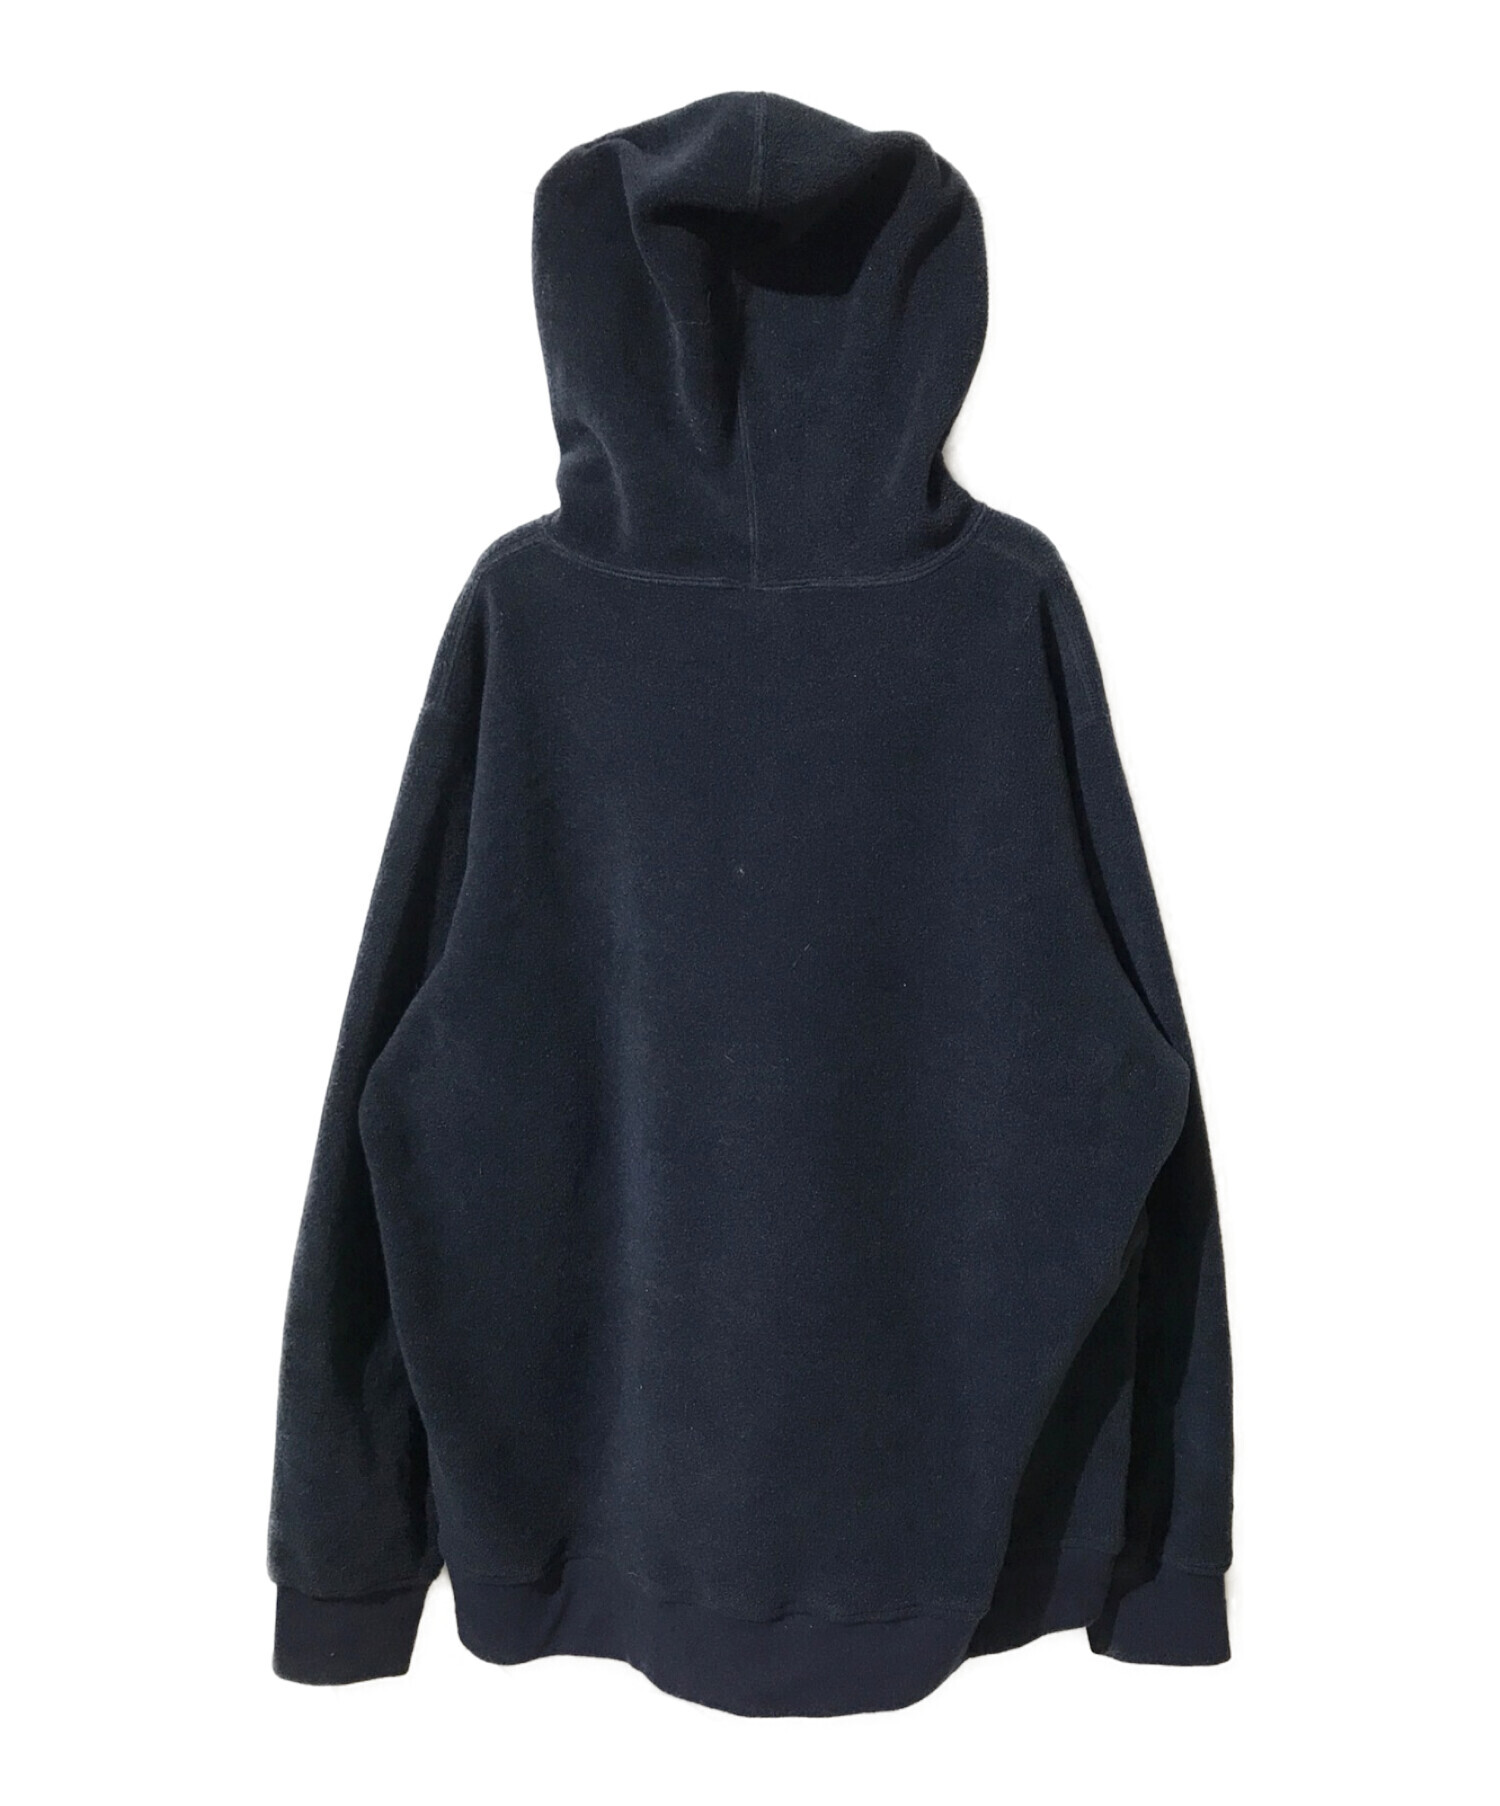 XL supreme polartec hooded sweatshirt